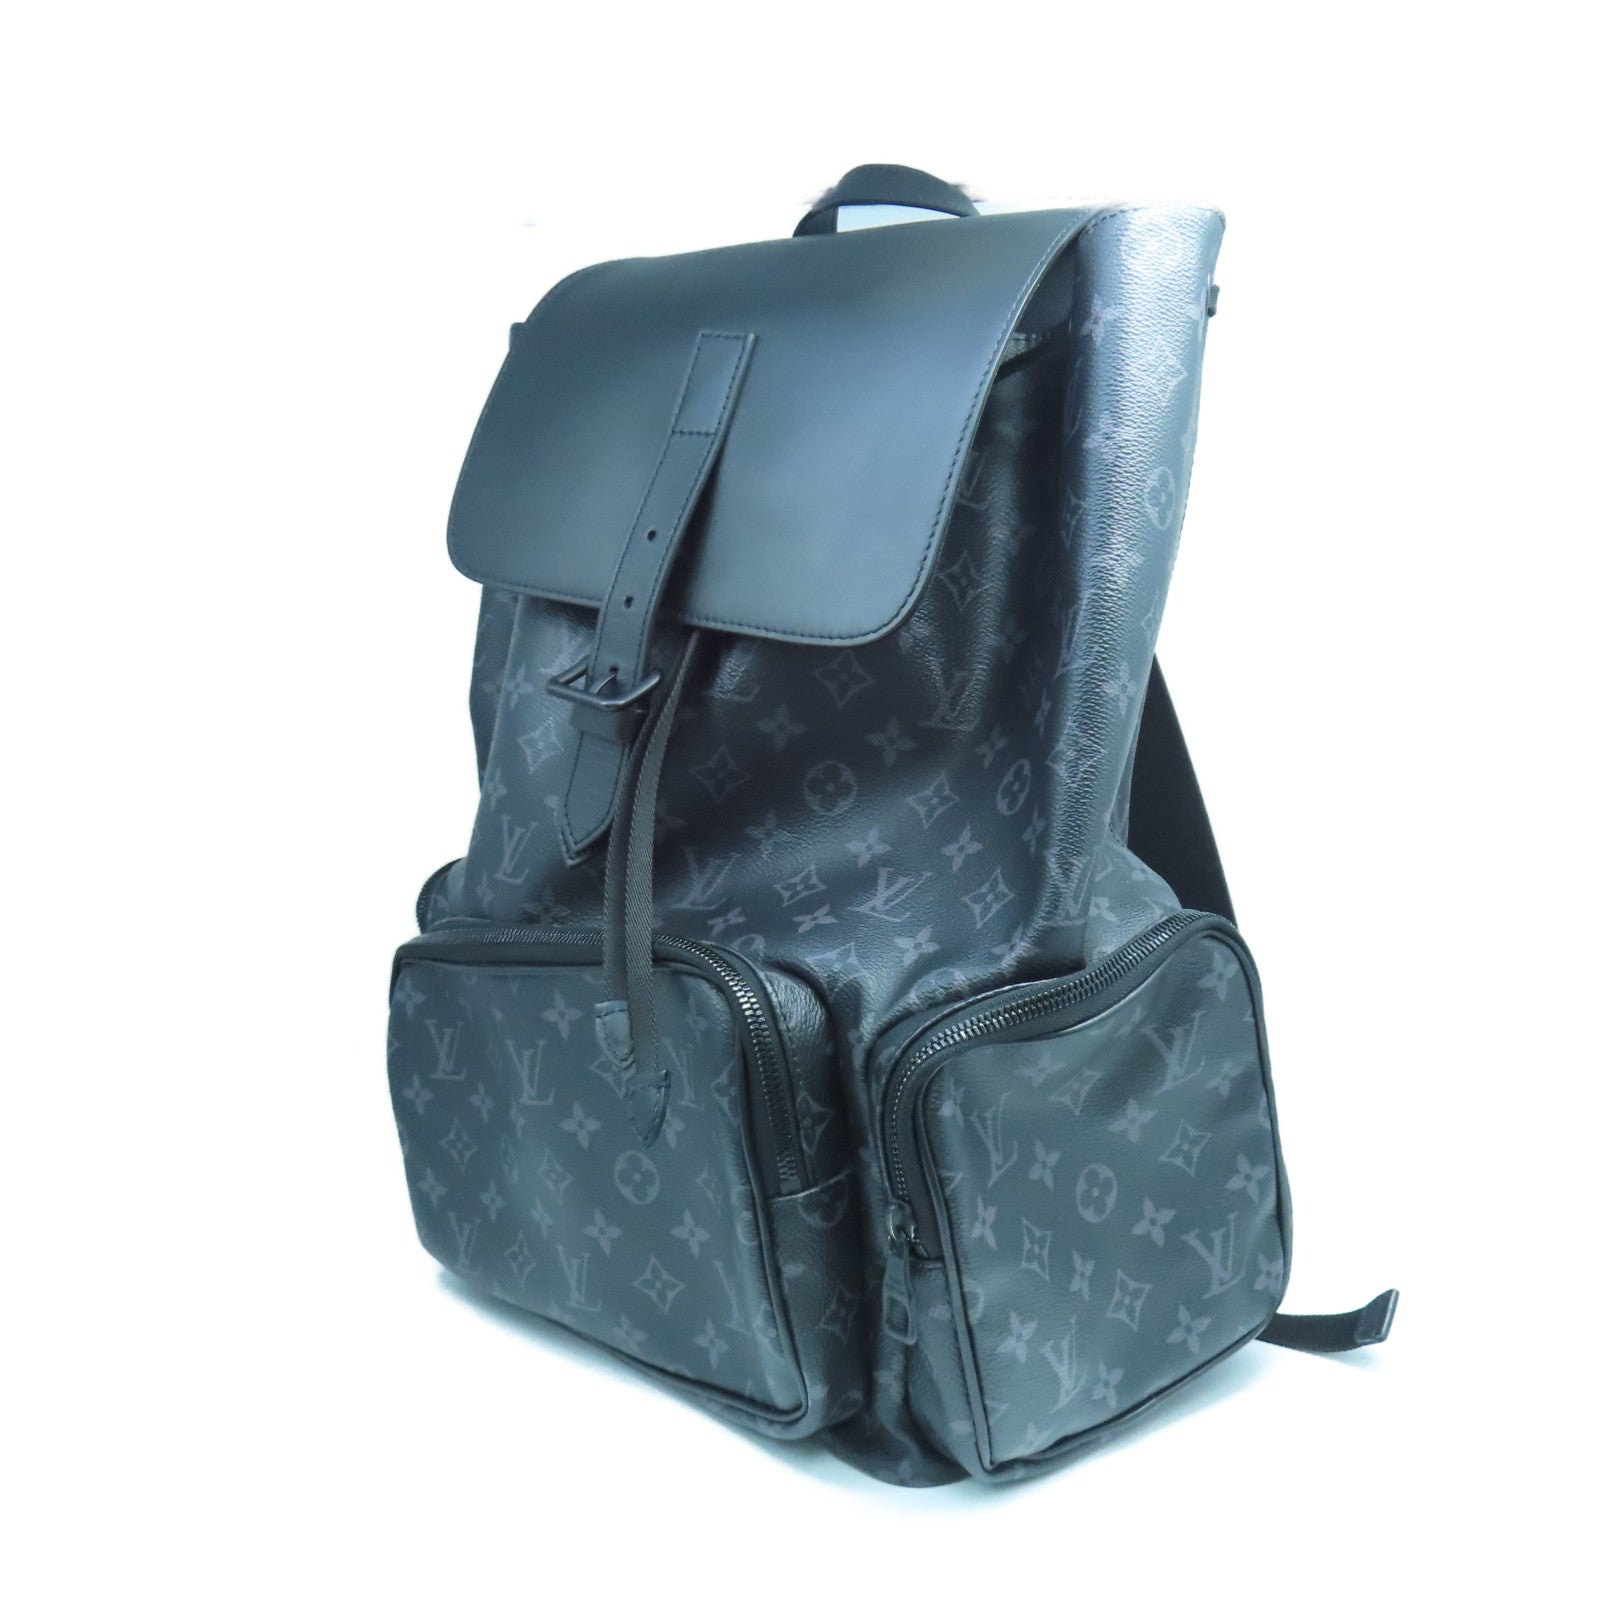 Louis Vuitton Backpack trio (M45538)